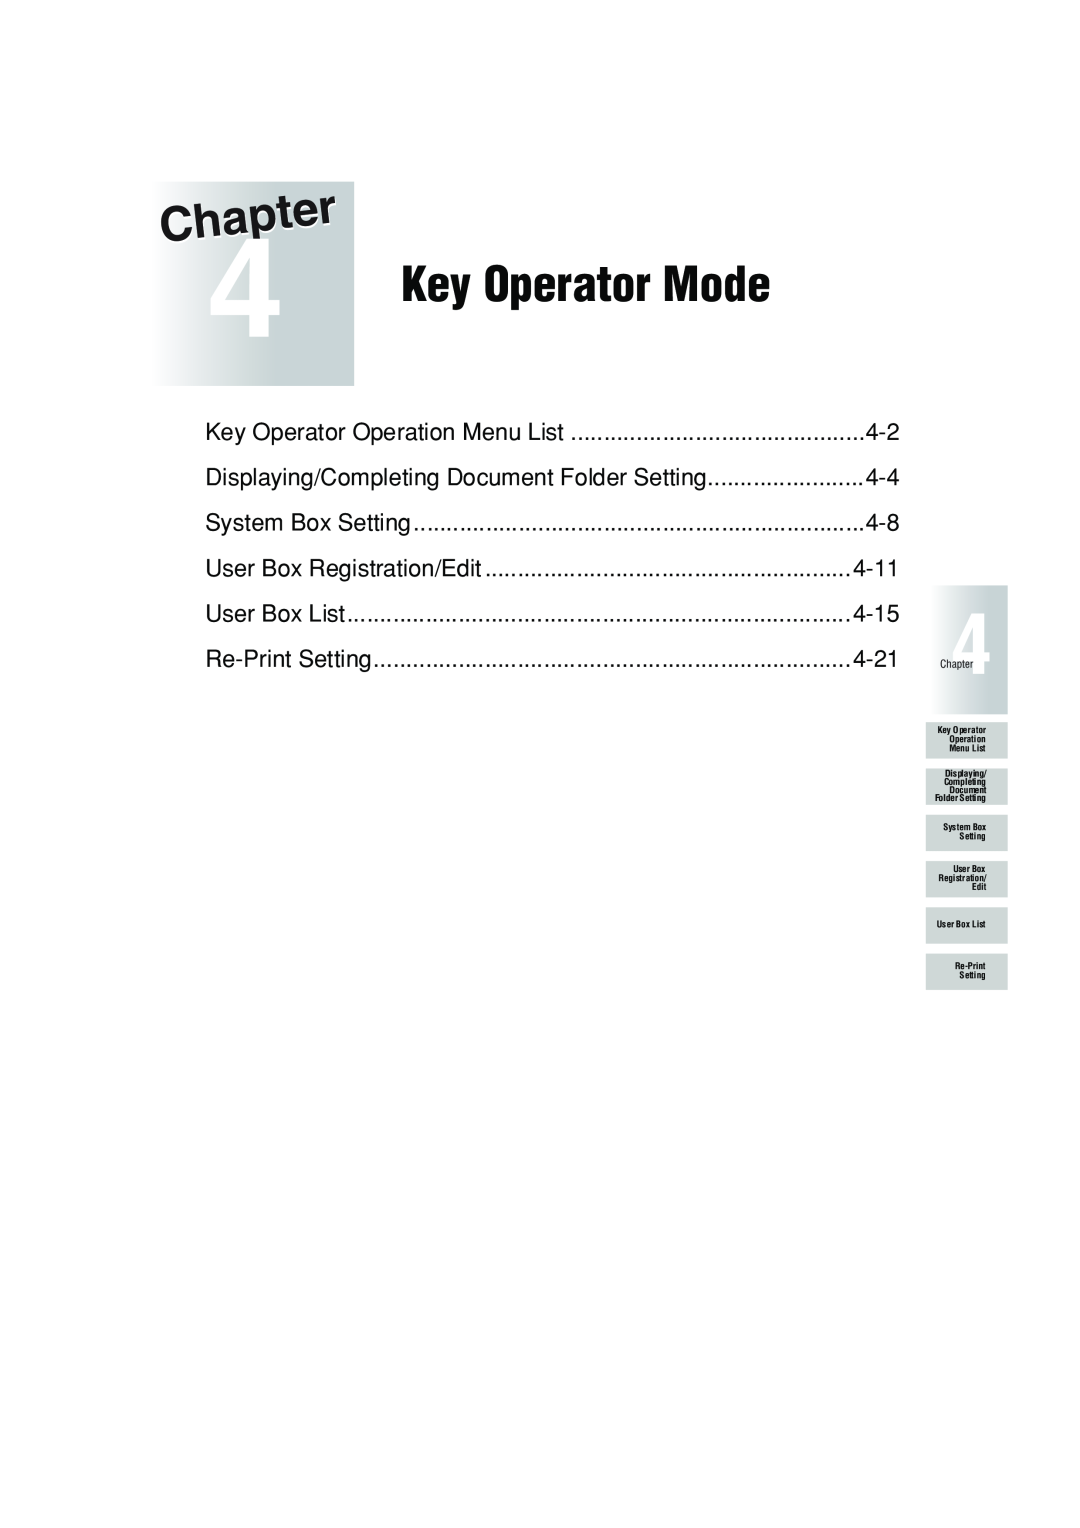 Konica Minolta 7222 Key Operator Mode, Displaying/Completing Document Folder Setting, User Box Registration/Edit, 4-11 